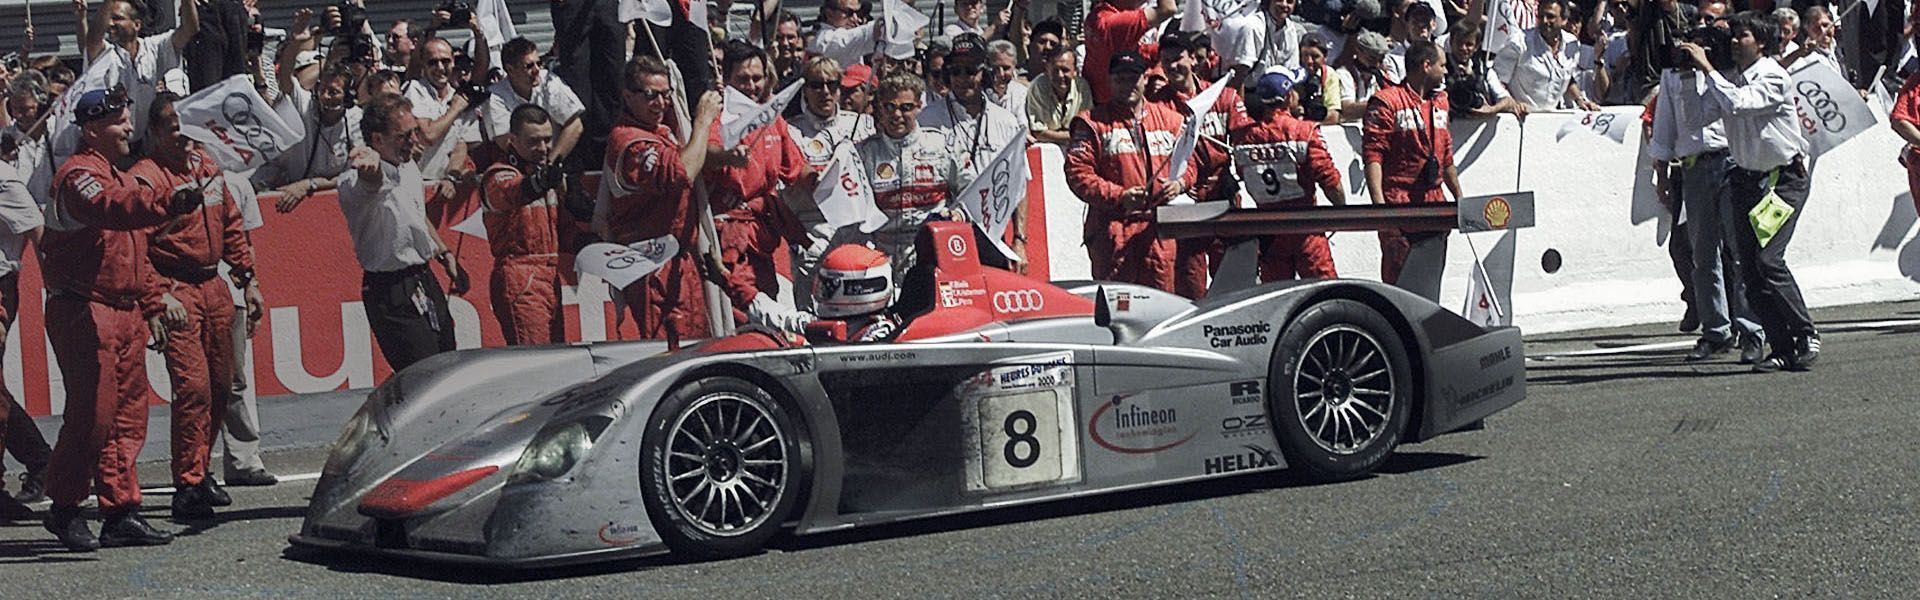 Audi R8 on the racetrack